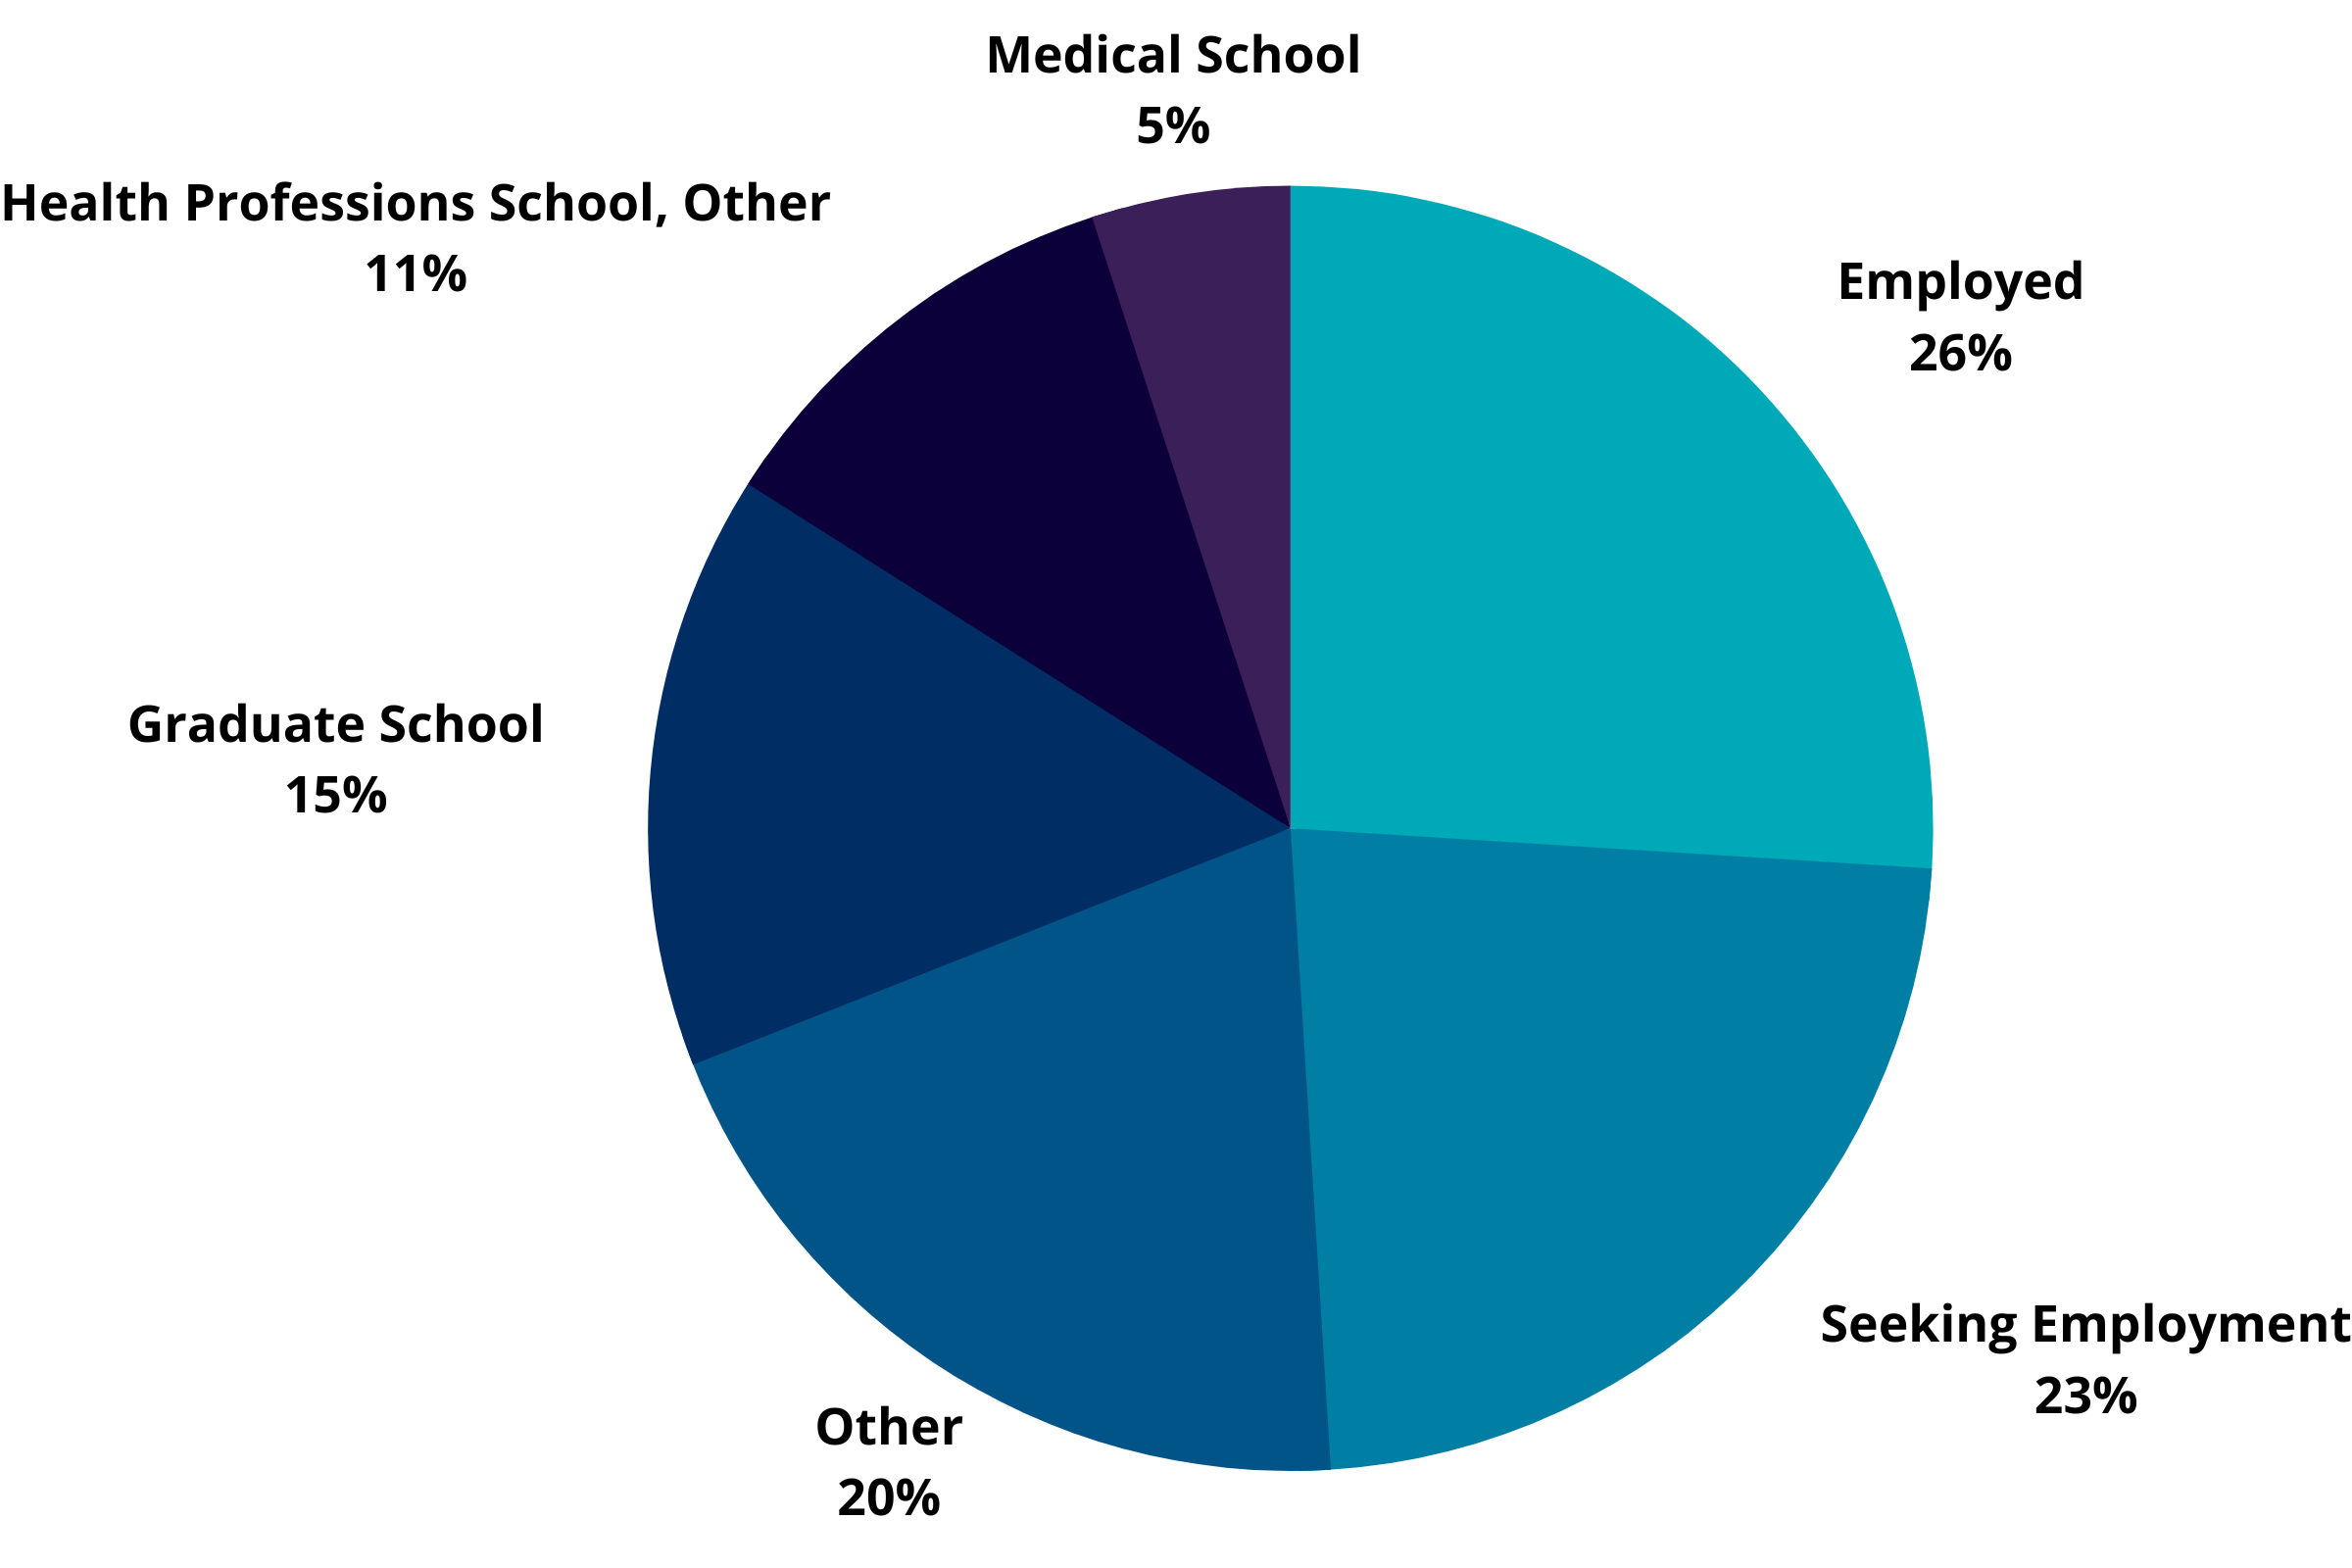 HDFS Graduation Outcomes: Employed 26%, Seeking Employment 23%, Graduate School 15%, Health Professions School 11%, Medical School 5%, Other 20%